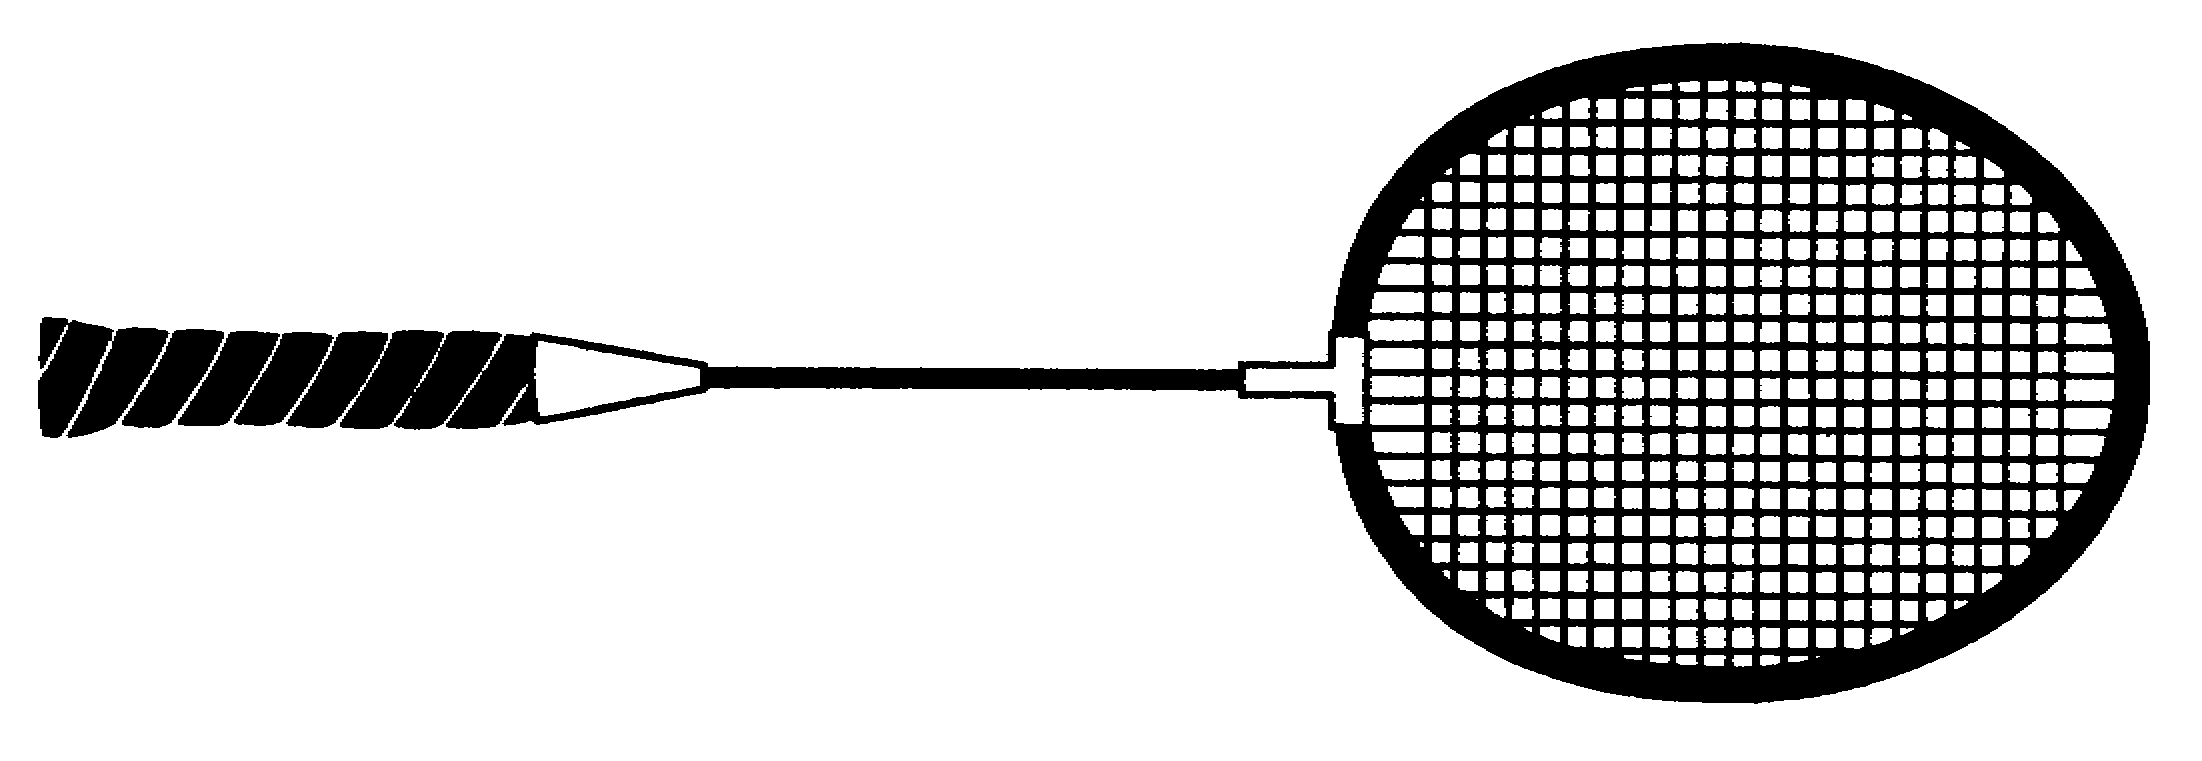 badminton birdie and racket clipart free